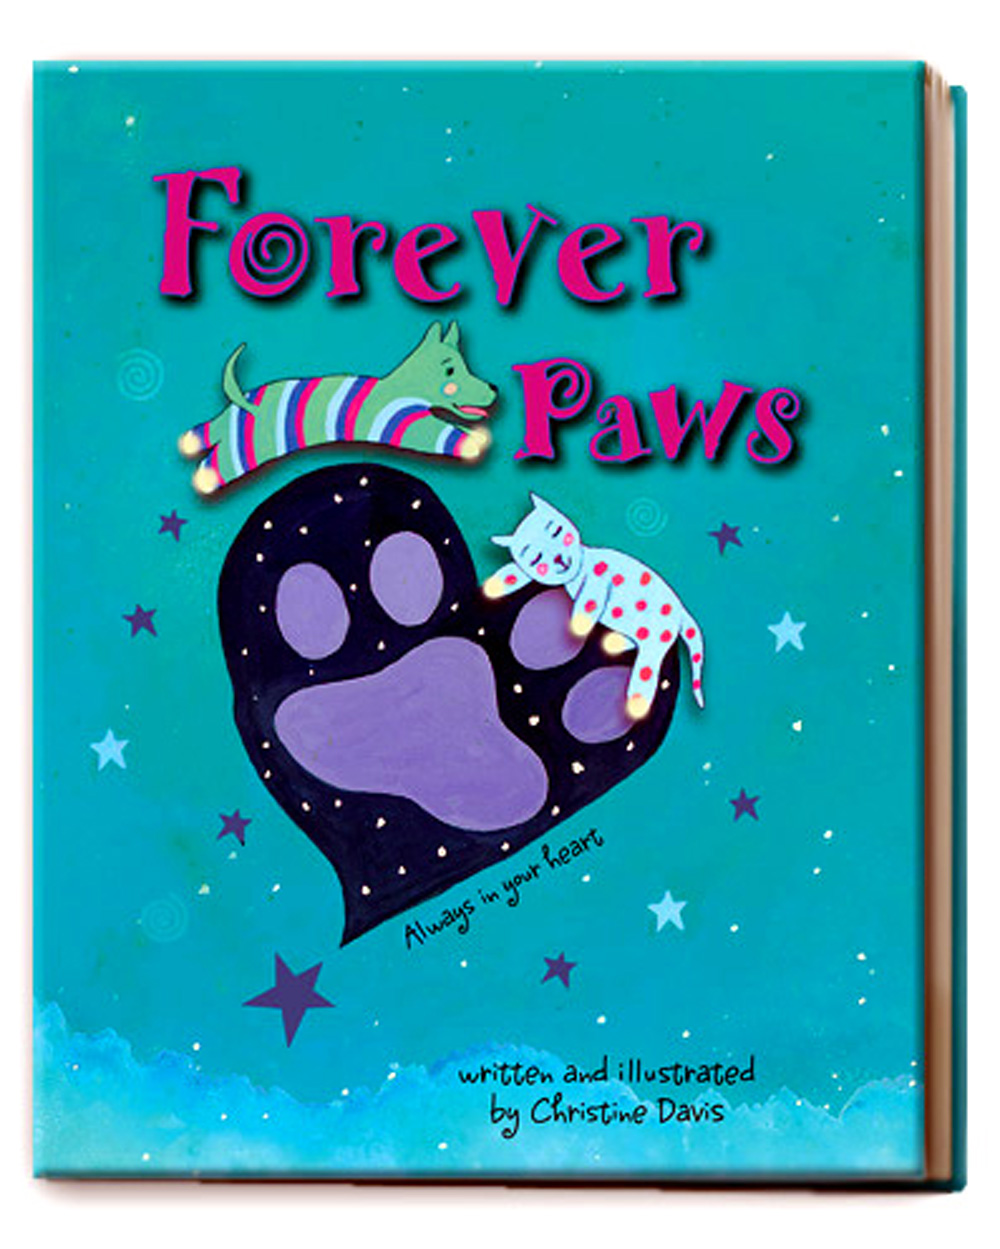 "Forever Paws" by Christine Davis